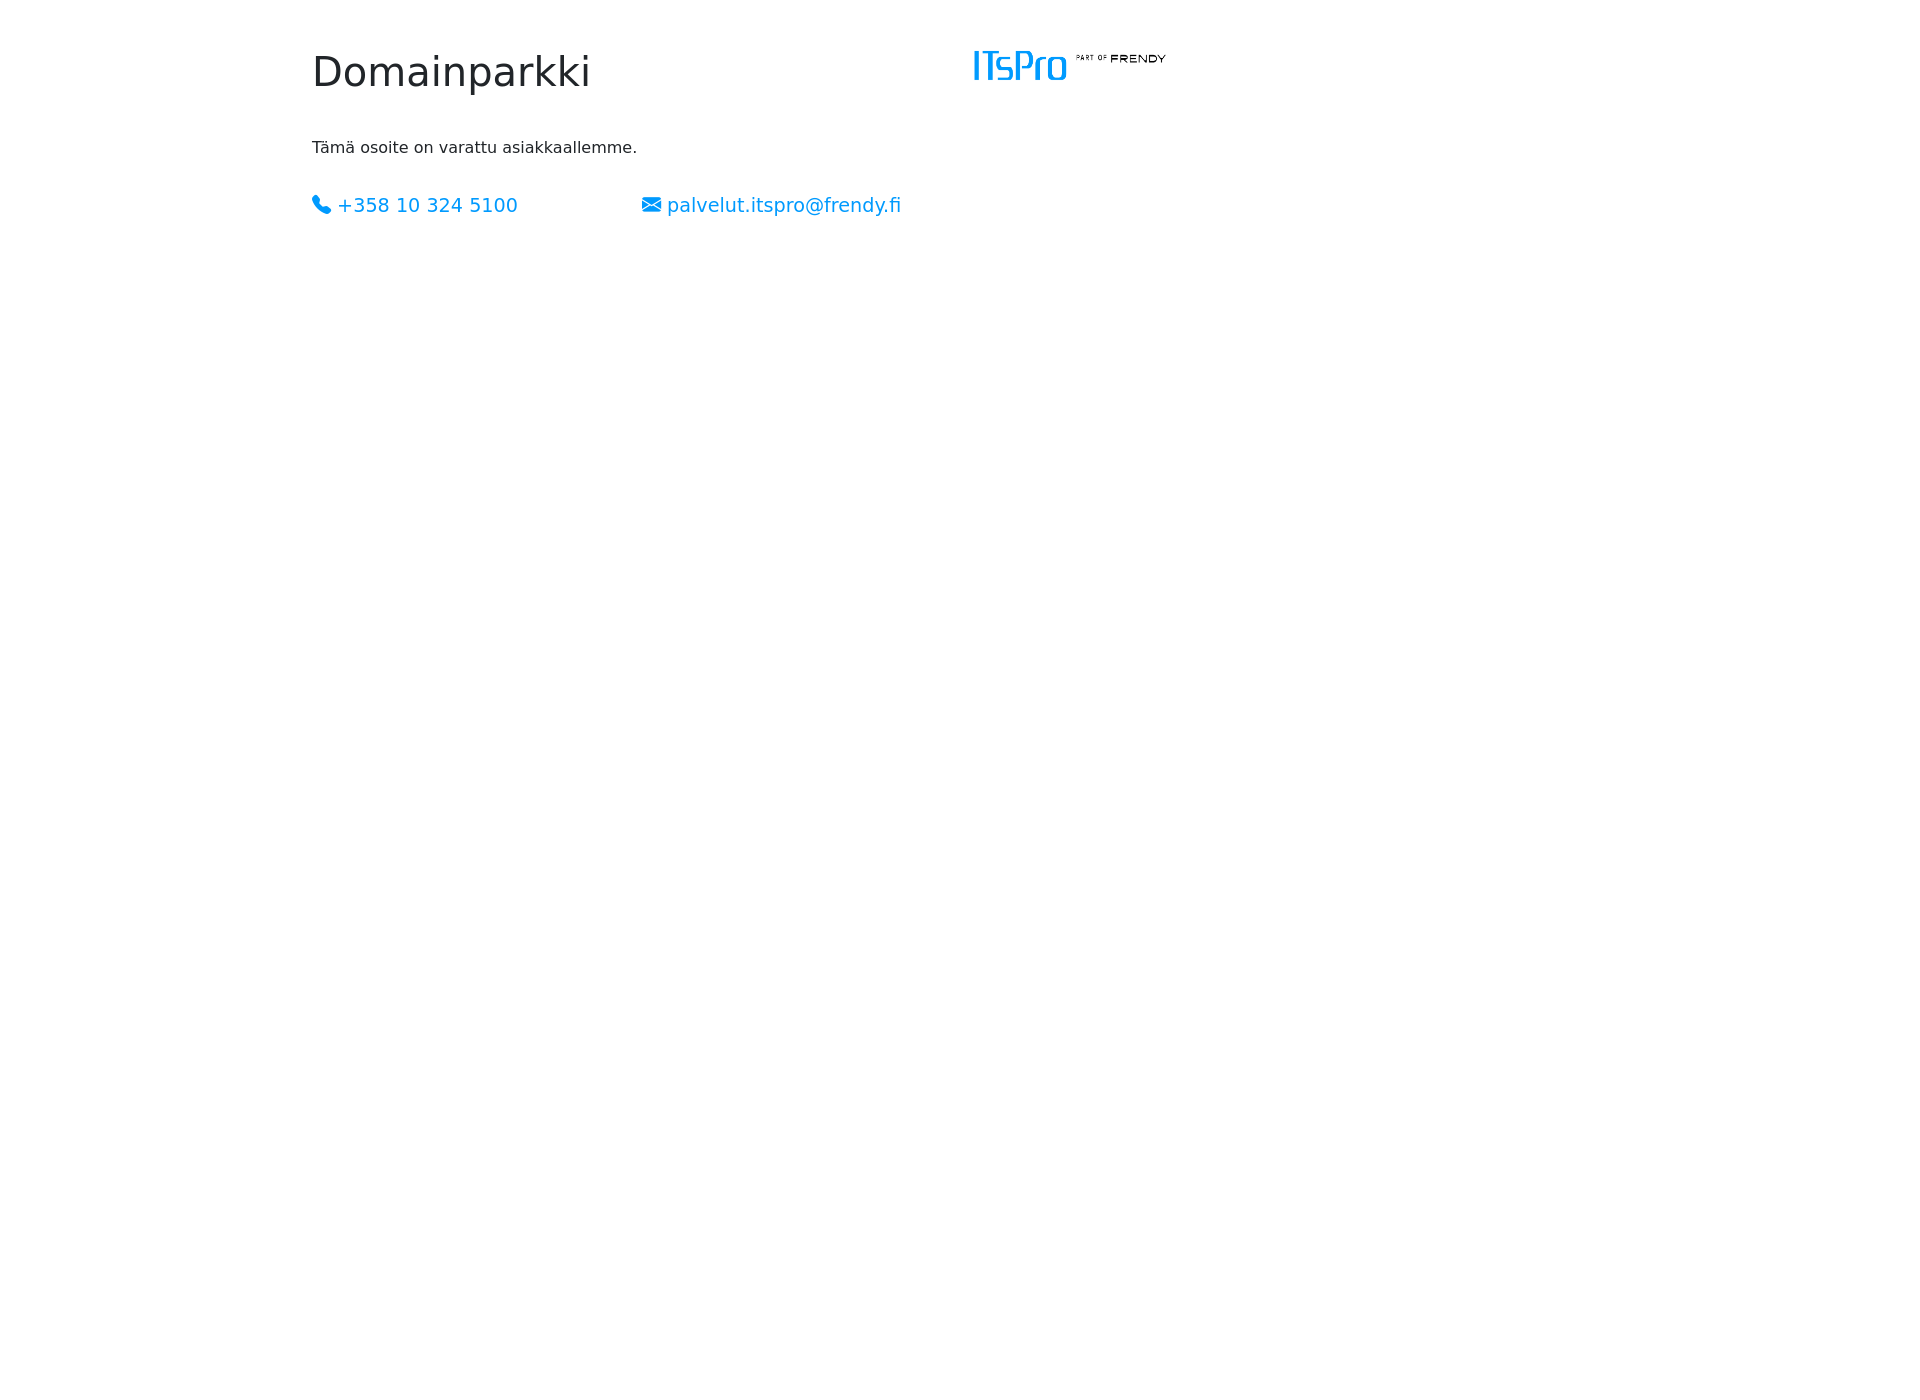 Screenshot for hallintaportaali.fi